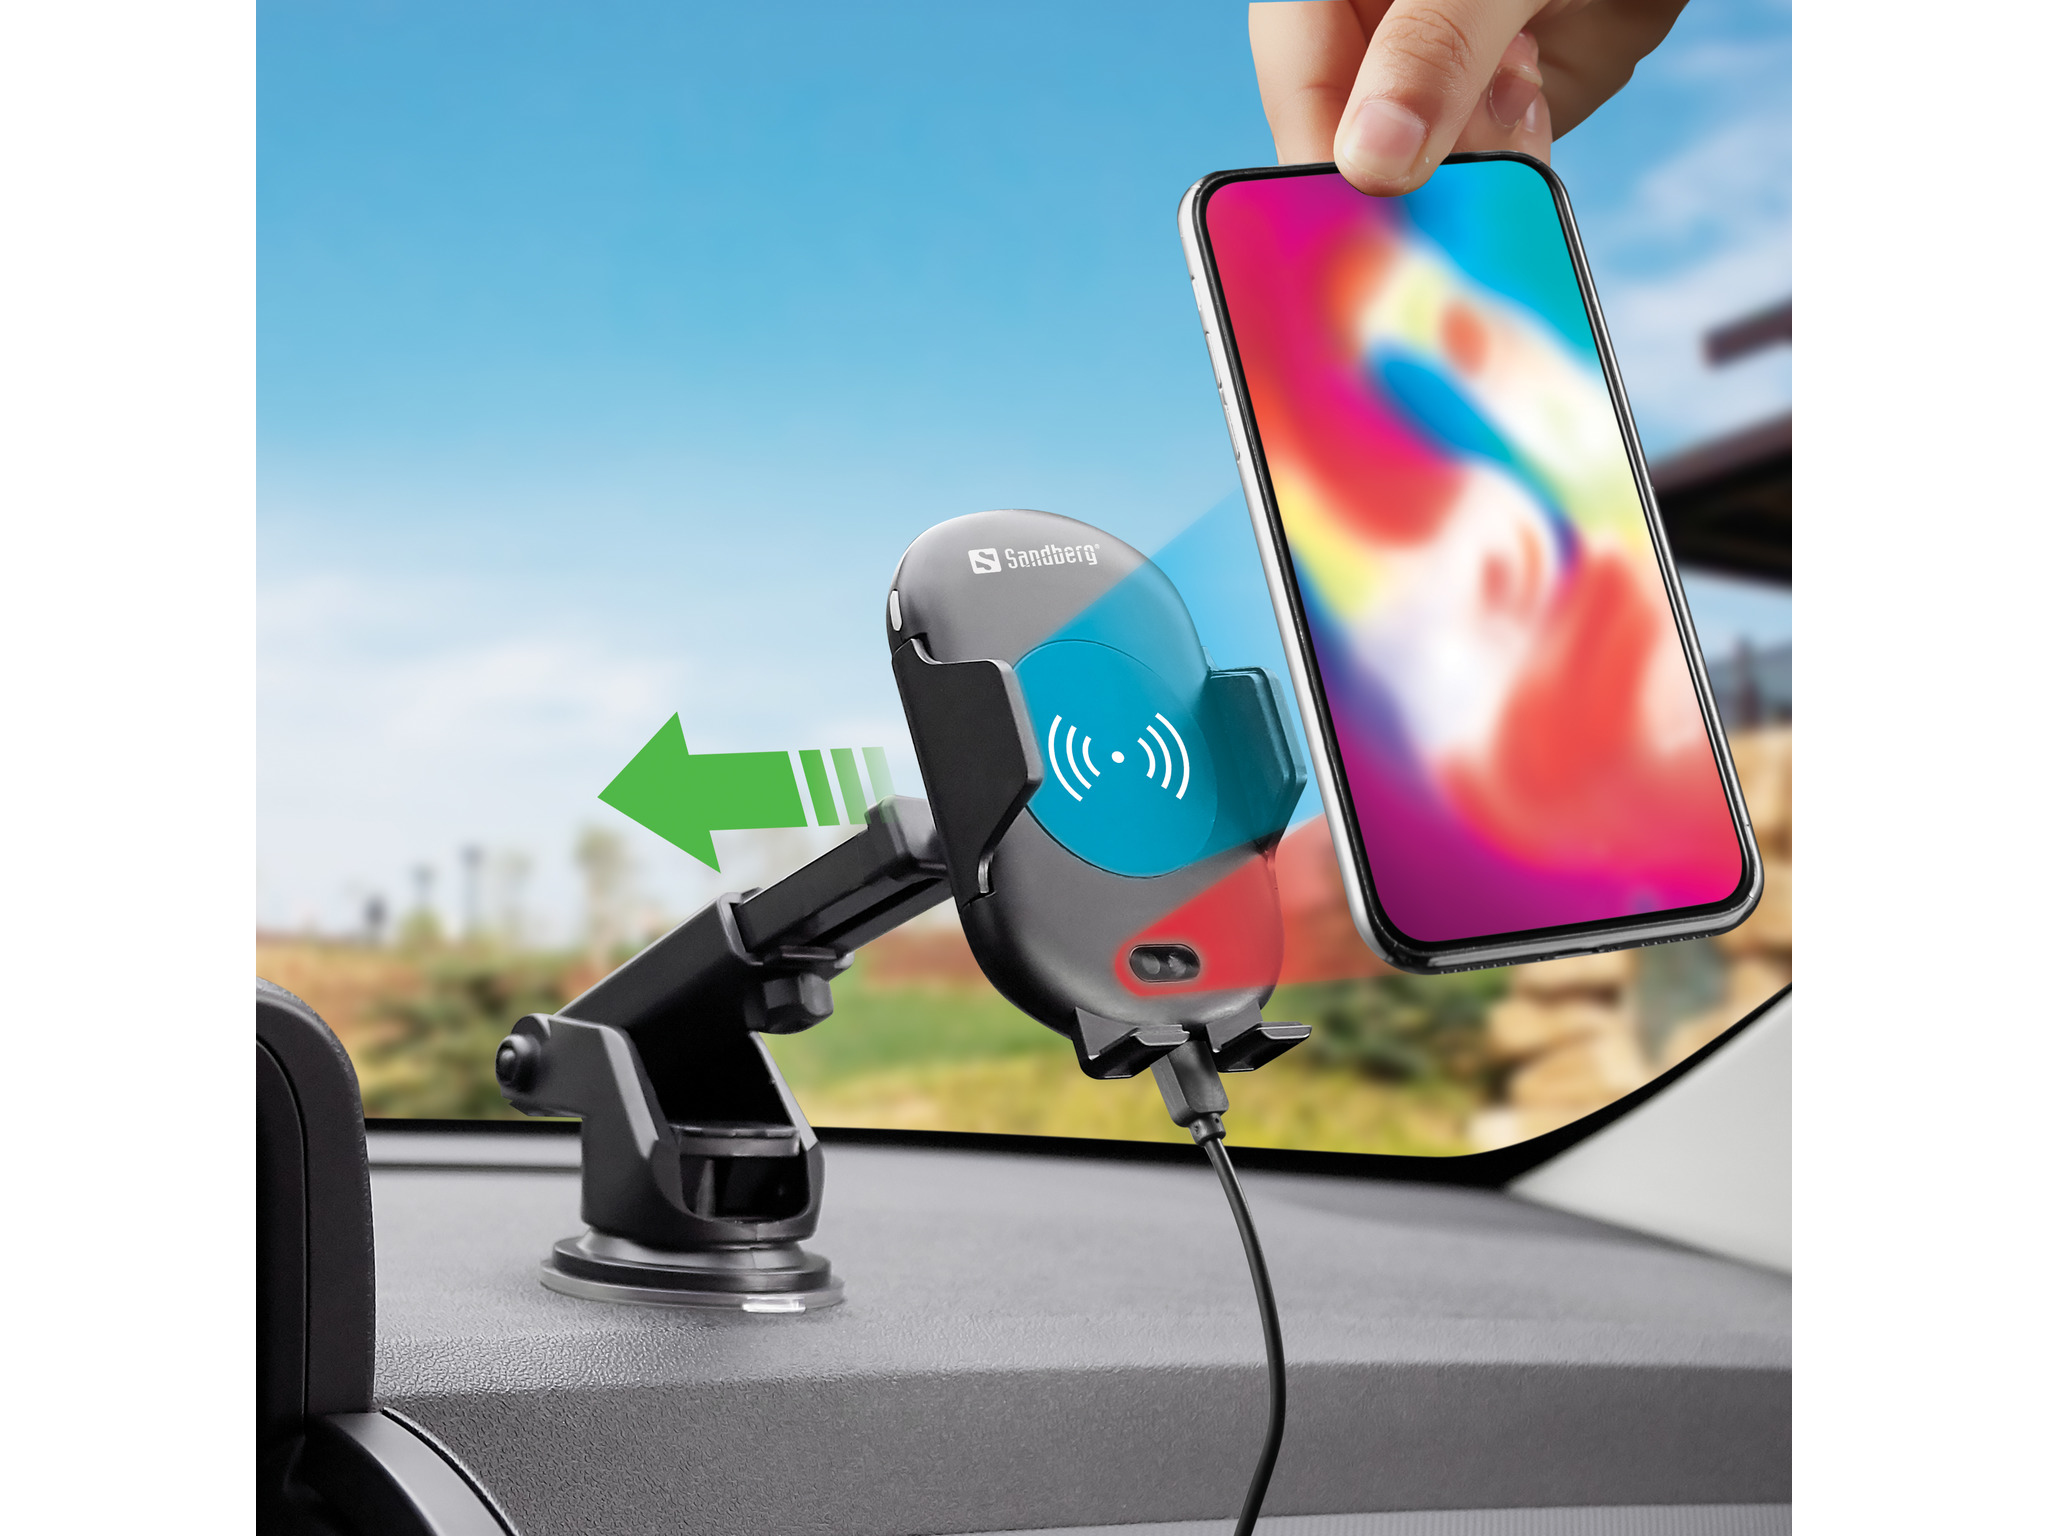 SANDBERG In Car Wireless Charger IR - Kabelloses Ladegerät